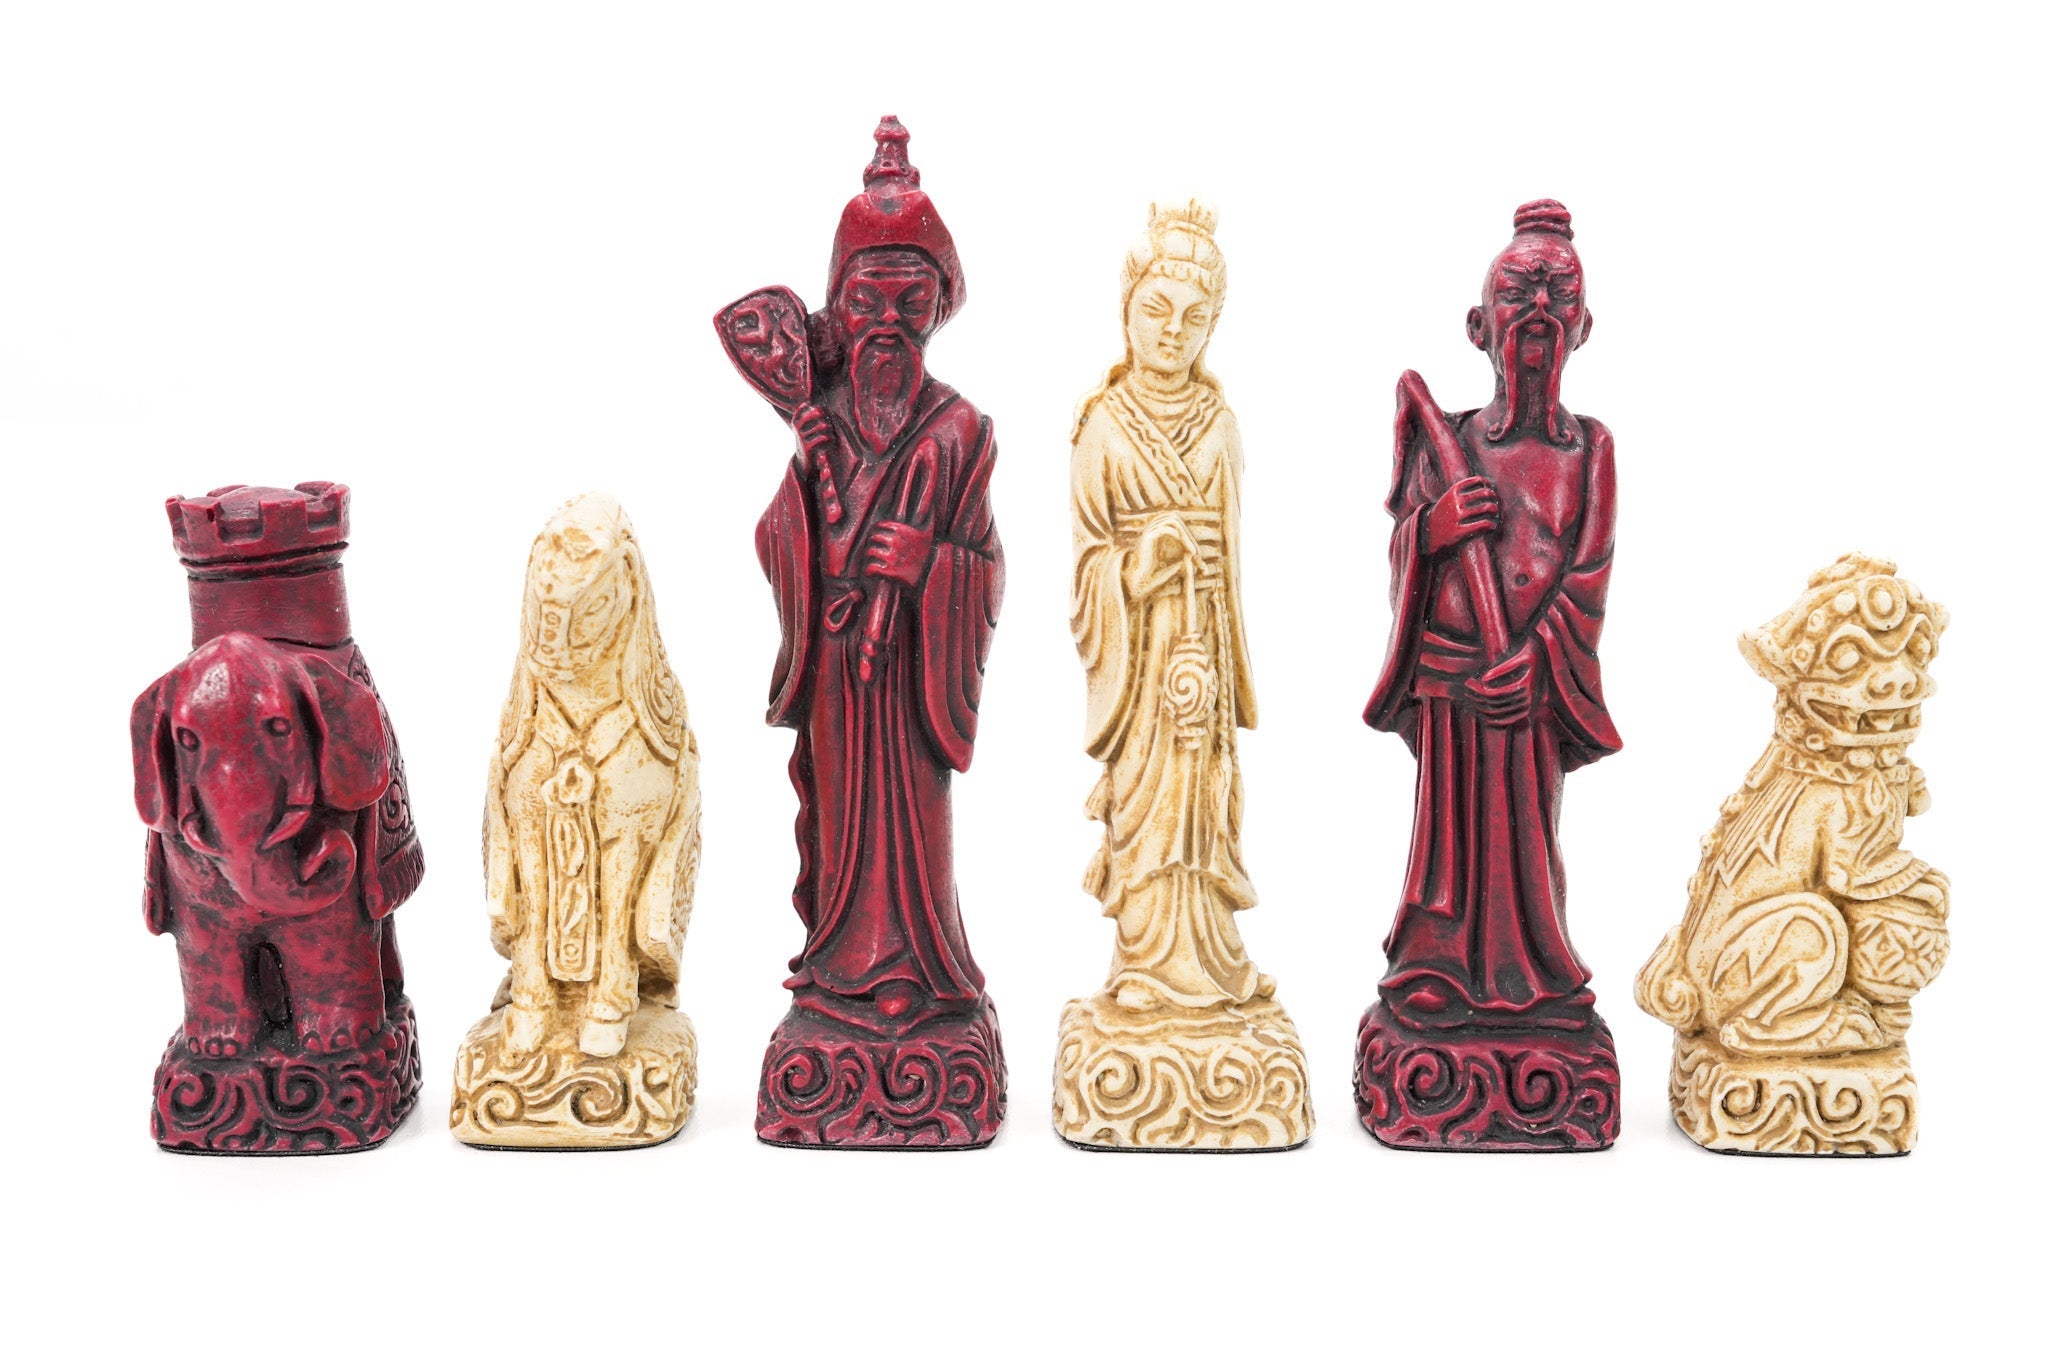 Mandarin Chess Pieces by Berkeley - Cardinal Red - Piece - Chess-House